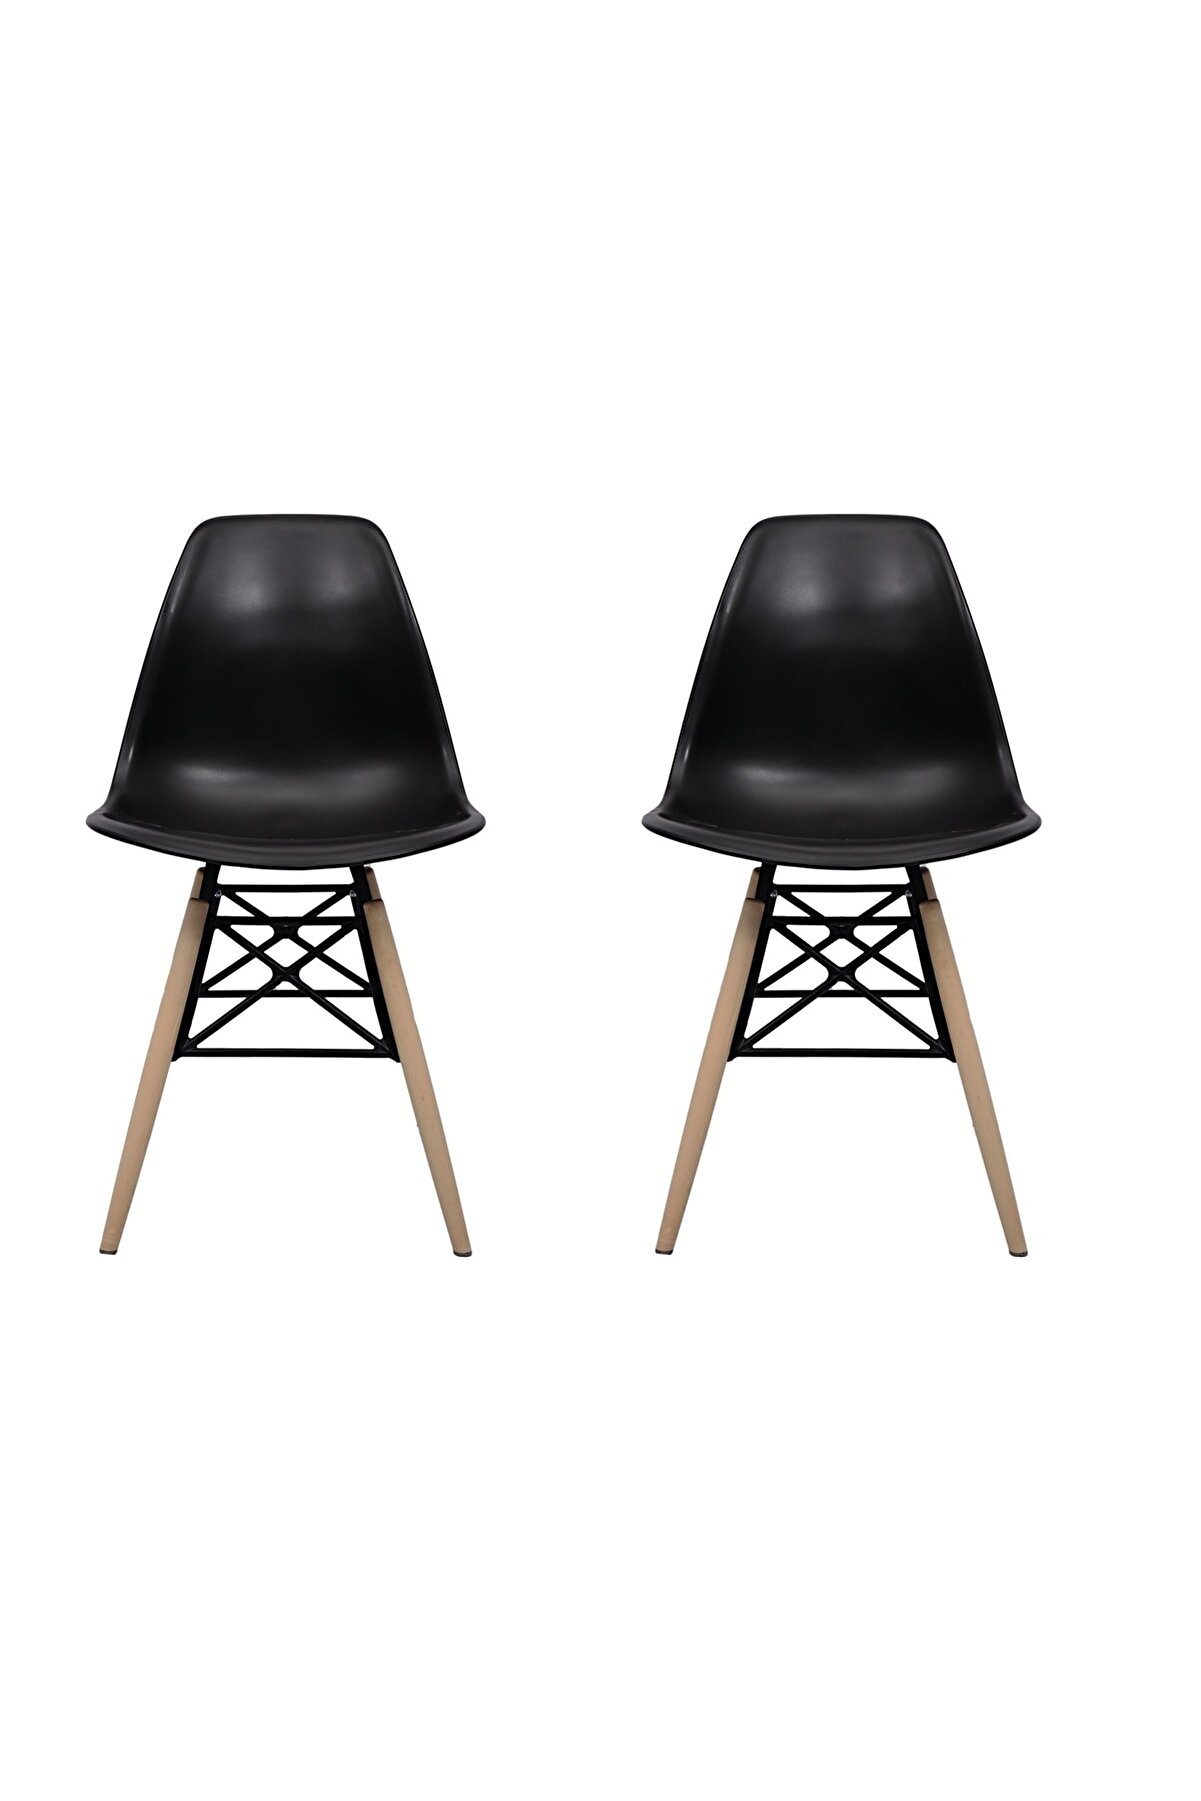 Dorcia Home Siyah Eames Plastik Kafesli Sandalye - 2 Adet - Cafe Balkon Mutfak Sandalyesi